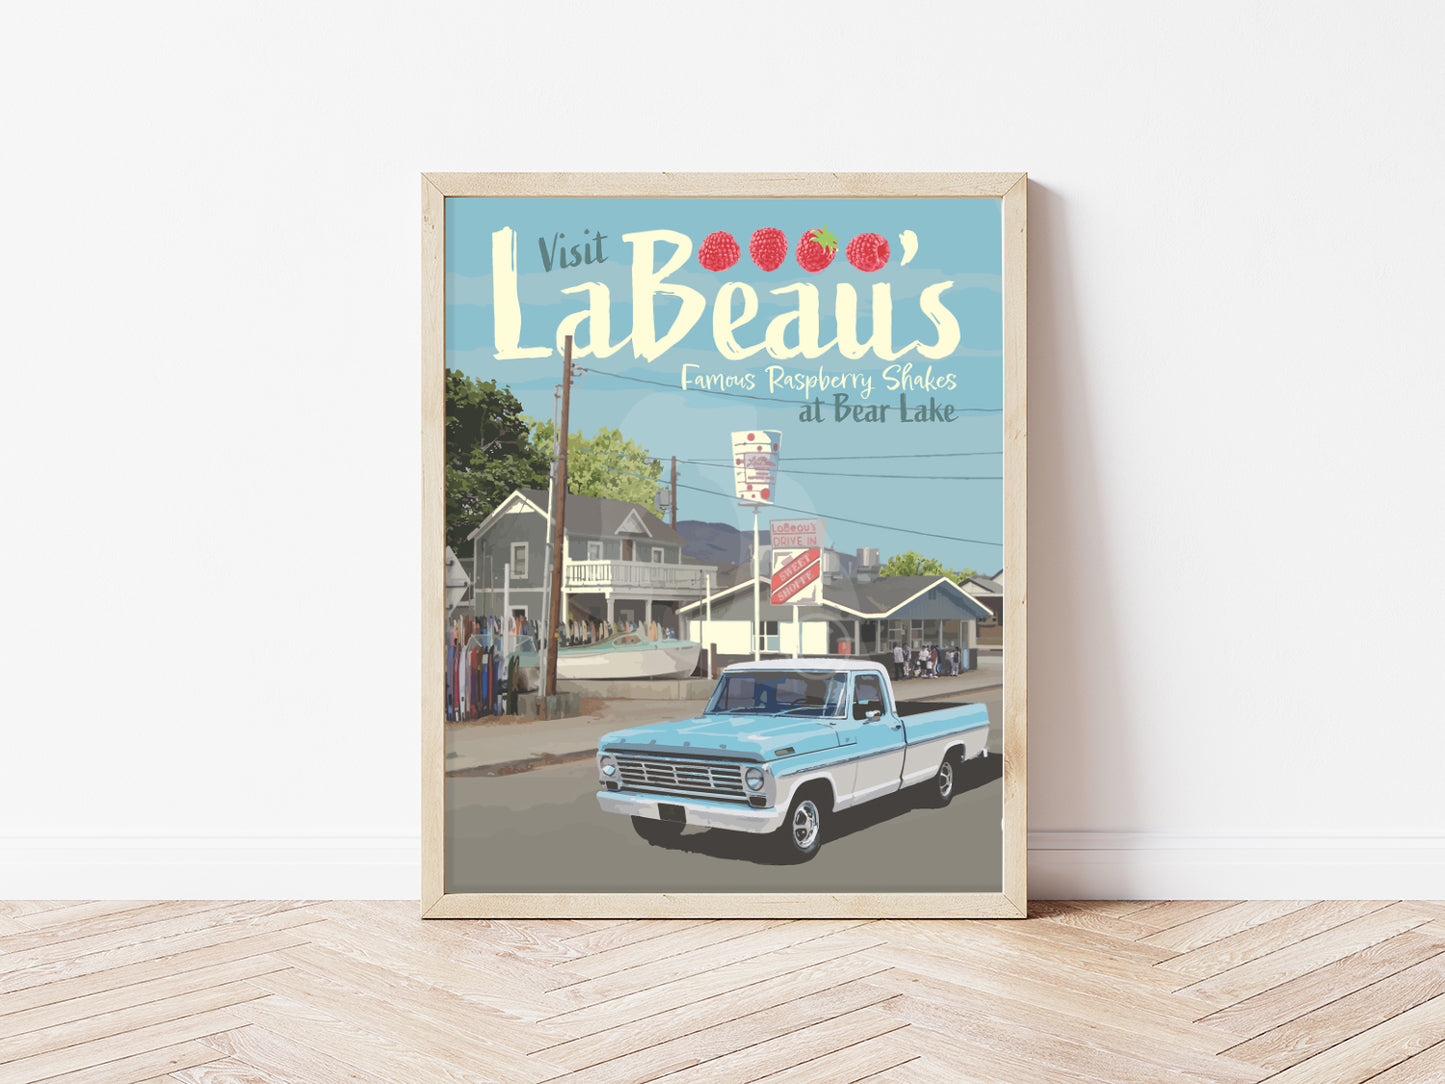 Bear Lake Raspberry Shakes Poster, Bear Lake Poster, Garden City Print, Bear Lake Vintage Style Art